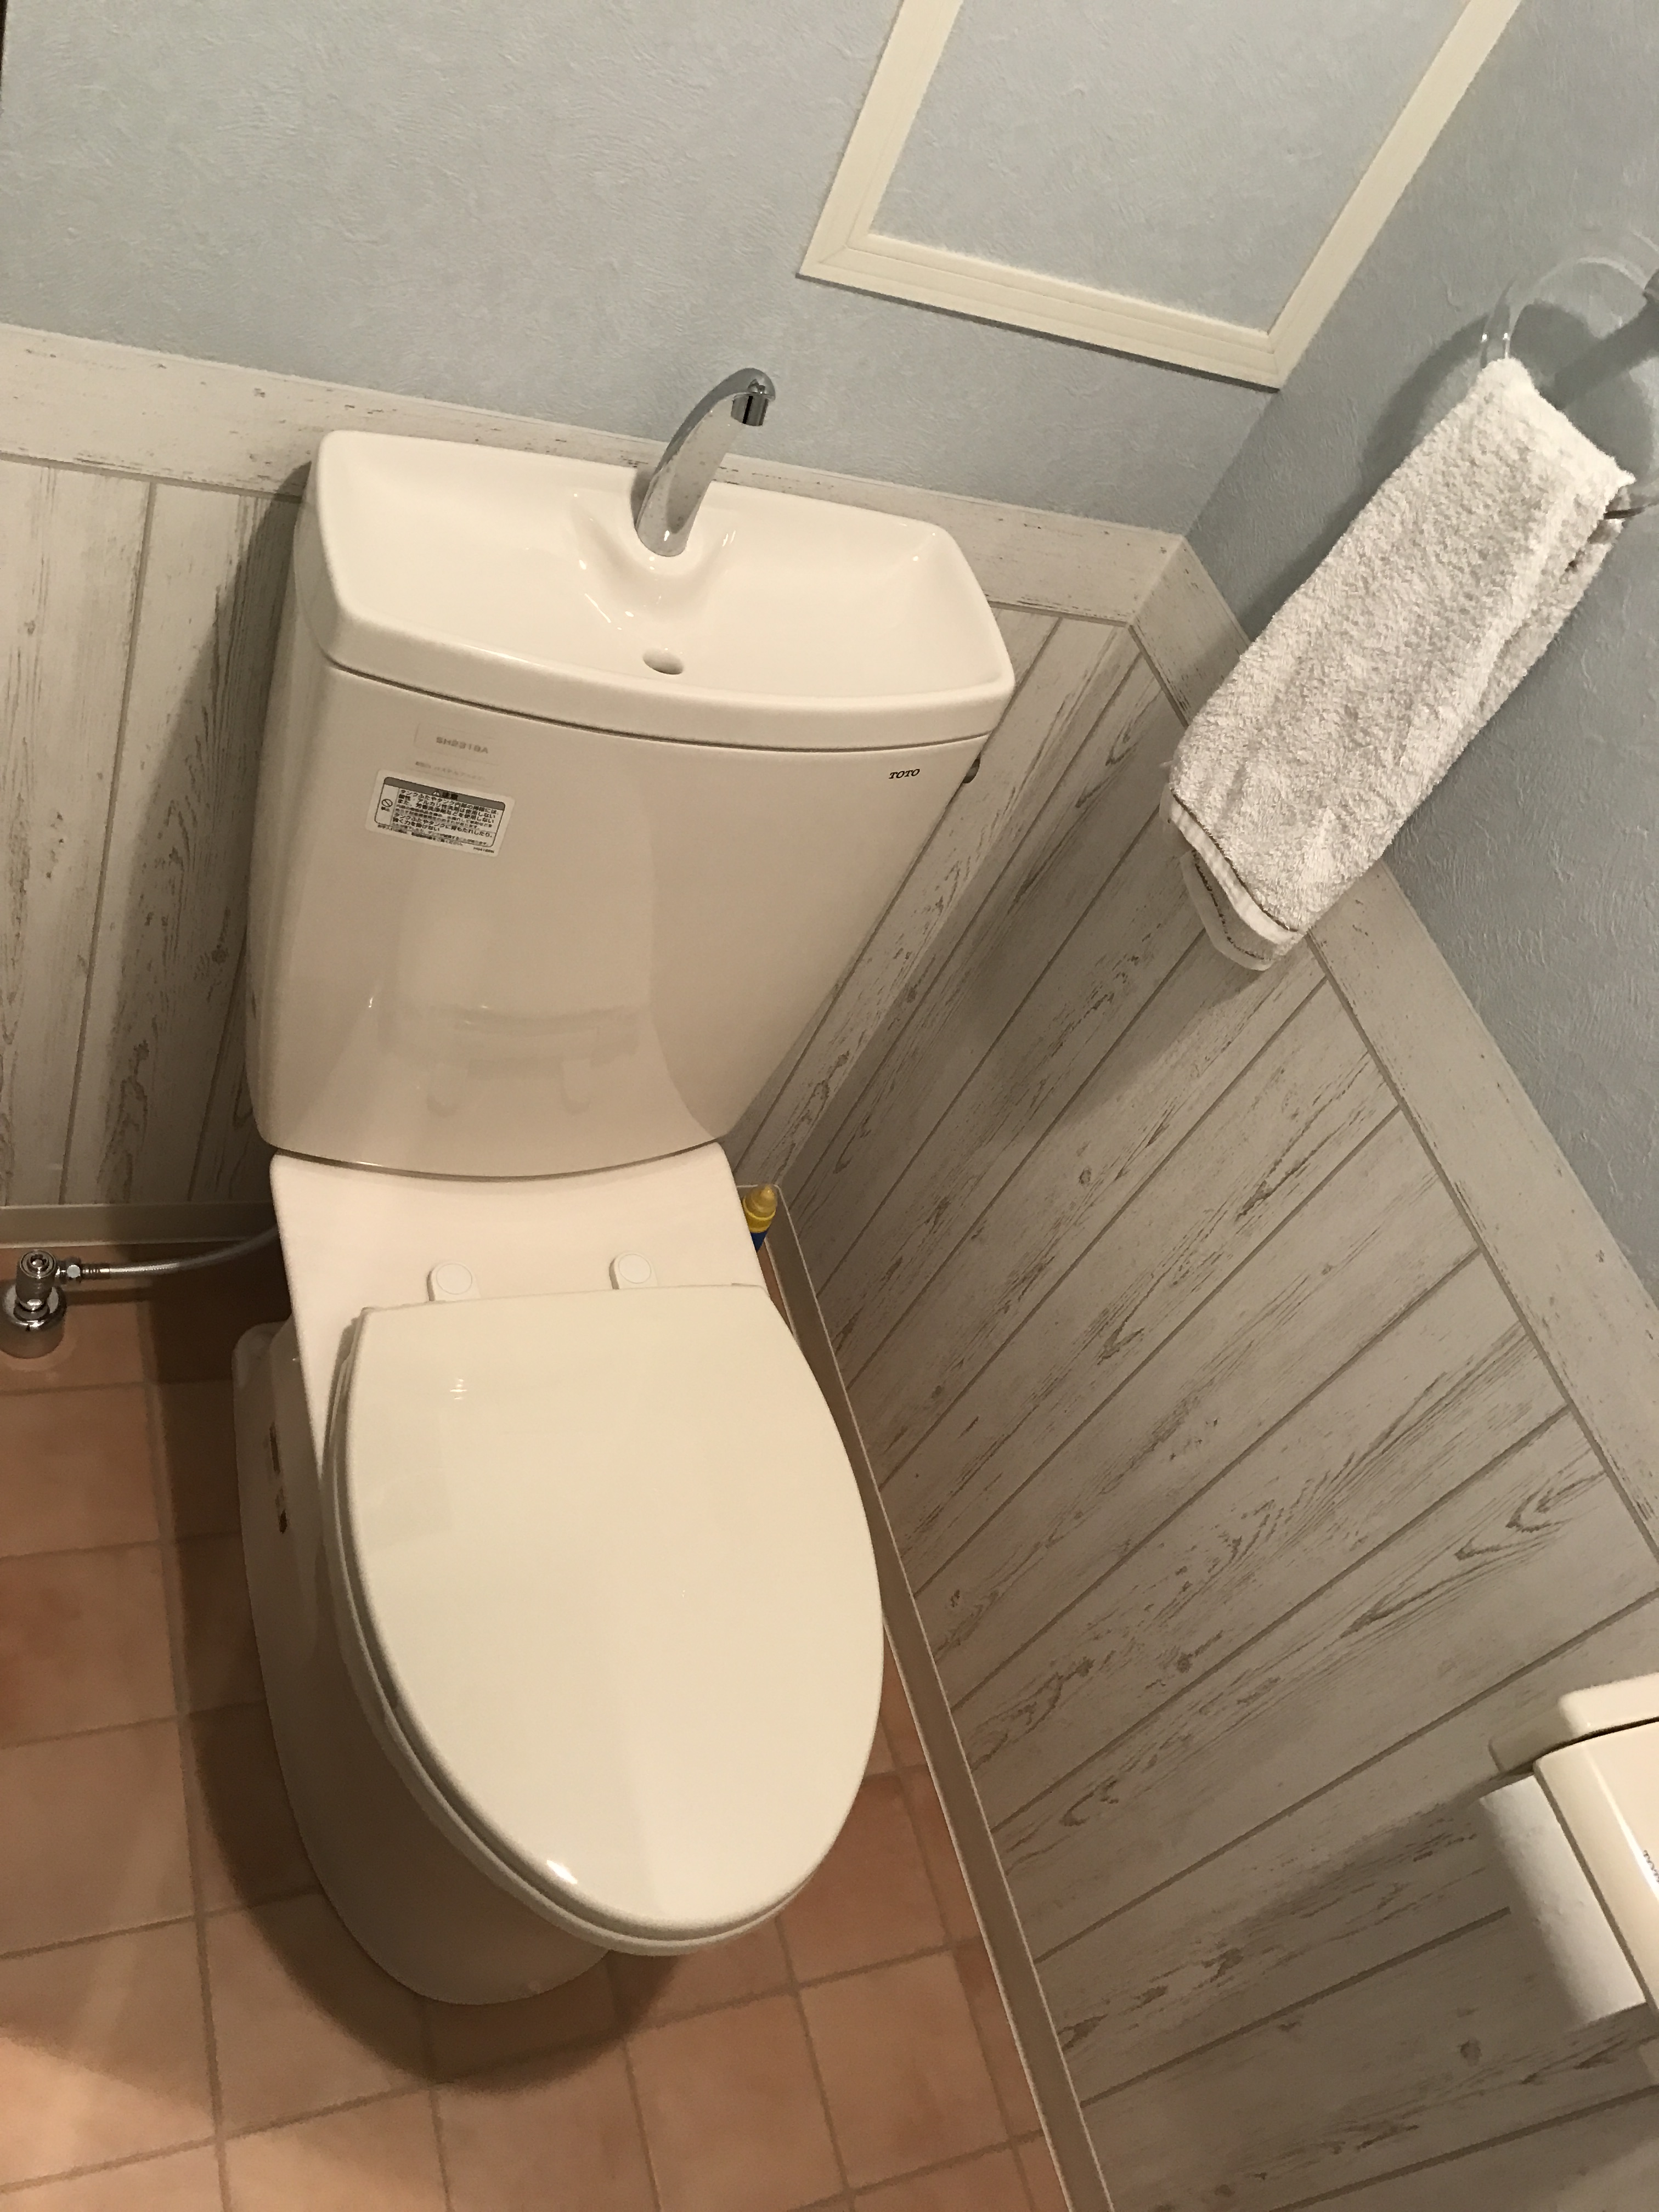 B 節水とデザインを重視したトイレ空間 尼崎市 ウェーブ西宮 西宮 宝塚 尼崎 伊丹 芦屋のリフォーム リノベーション